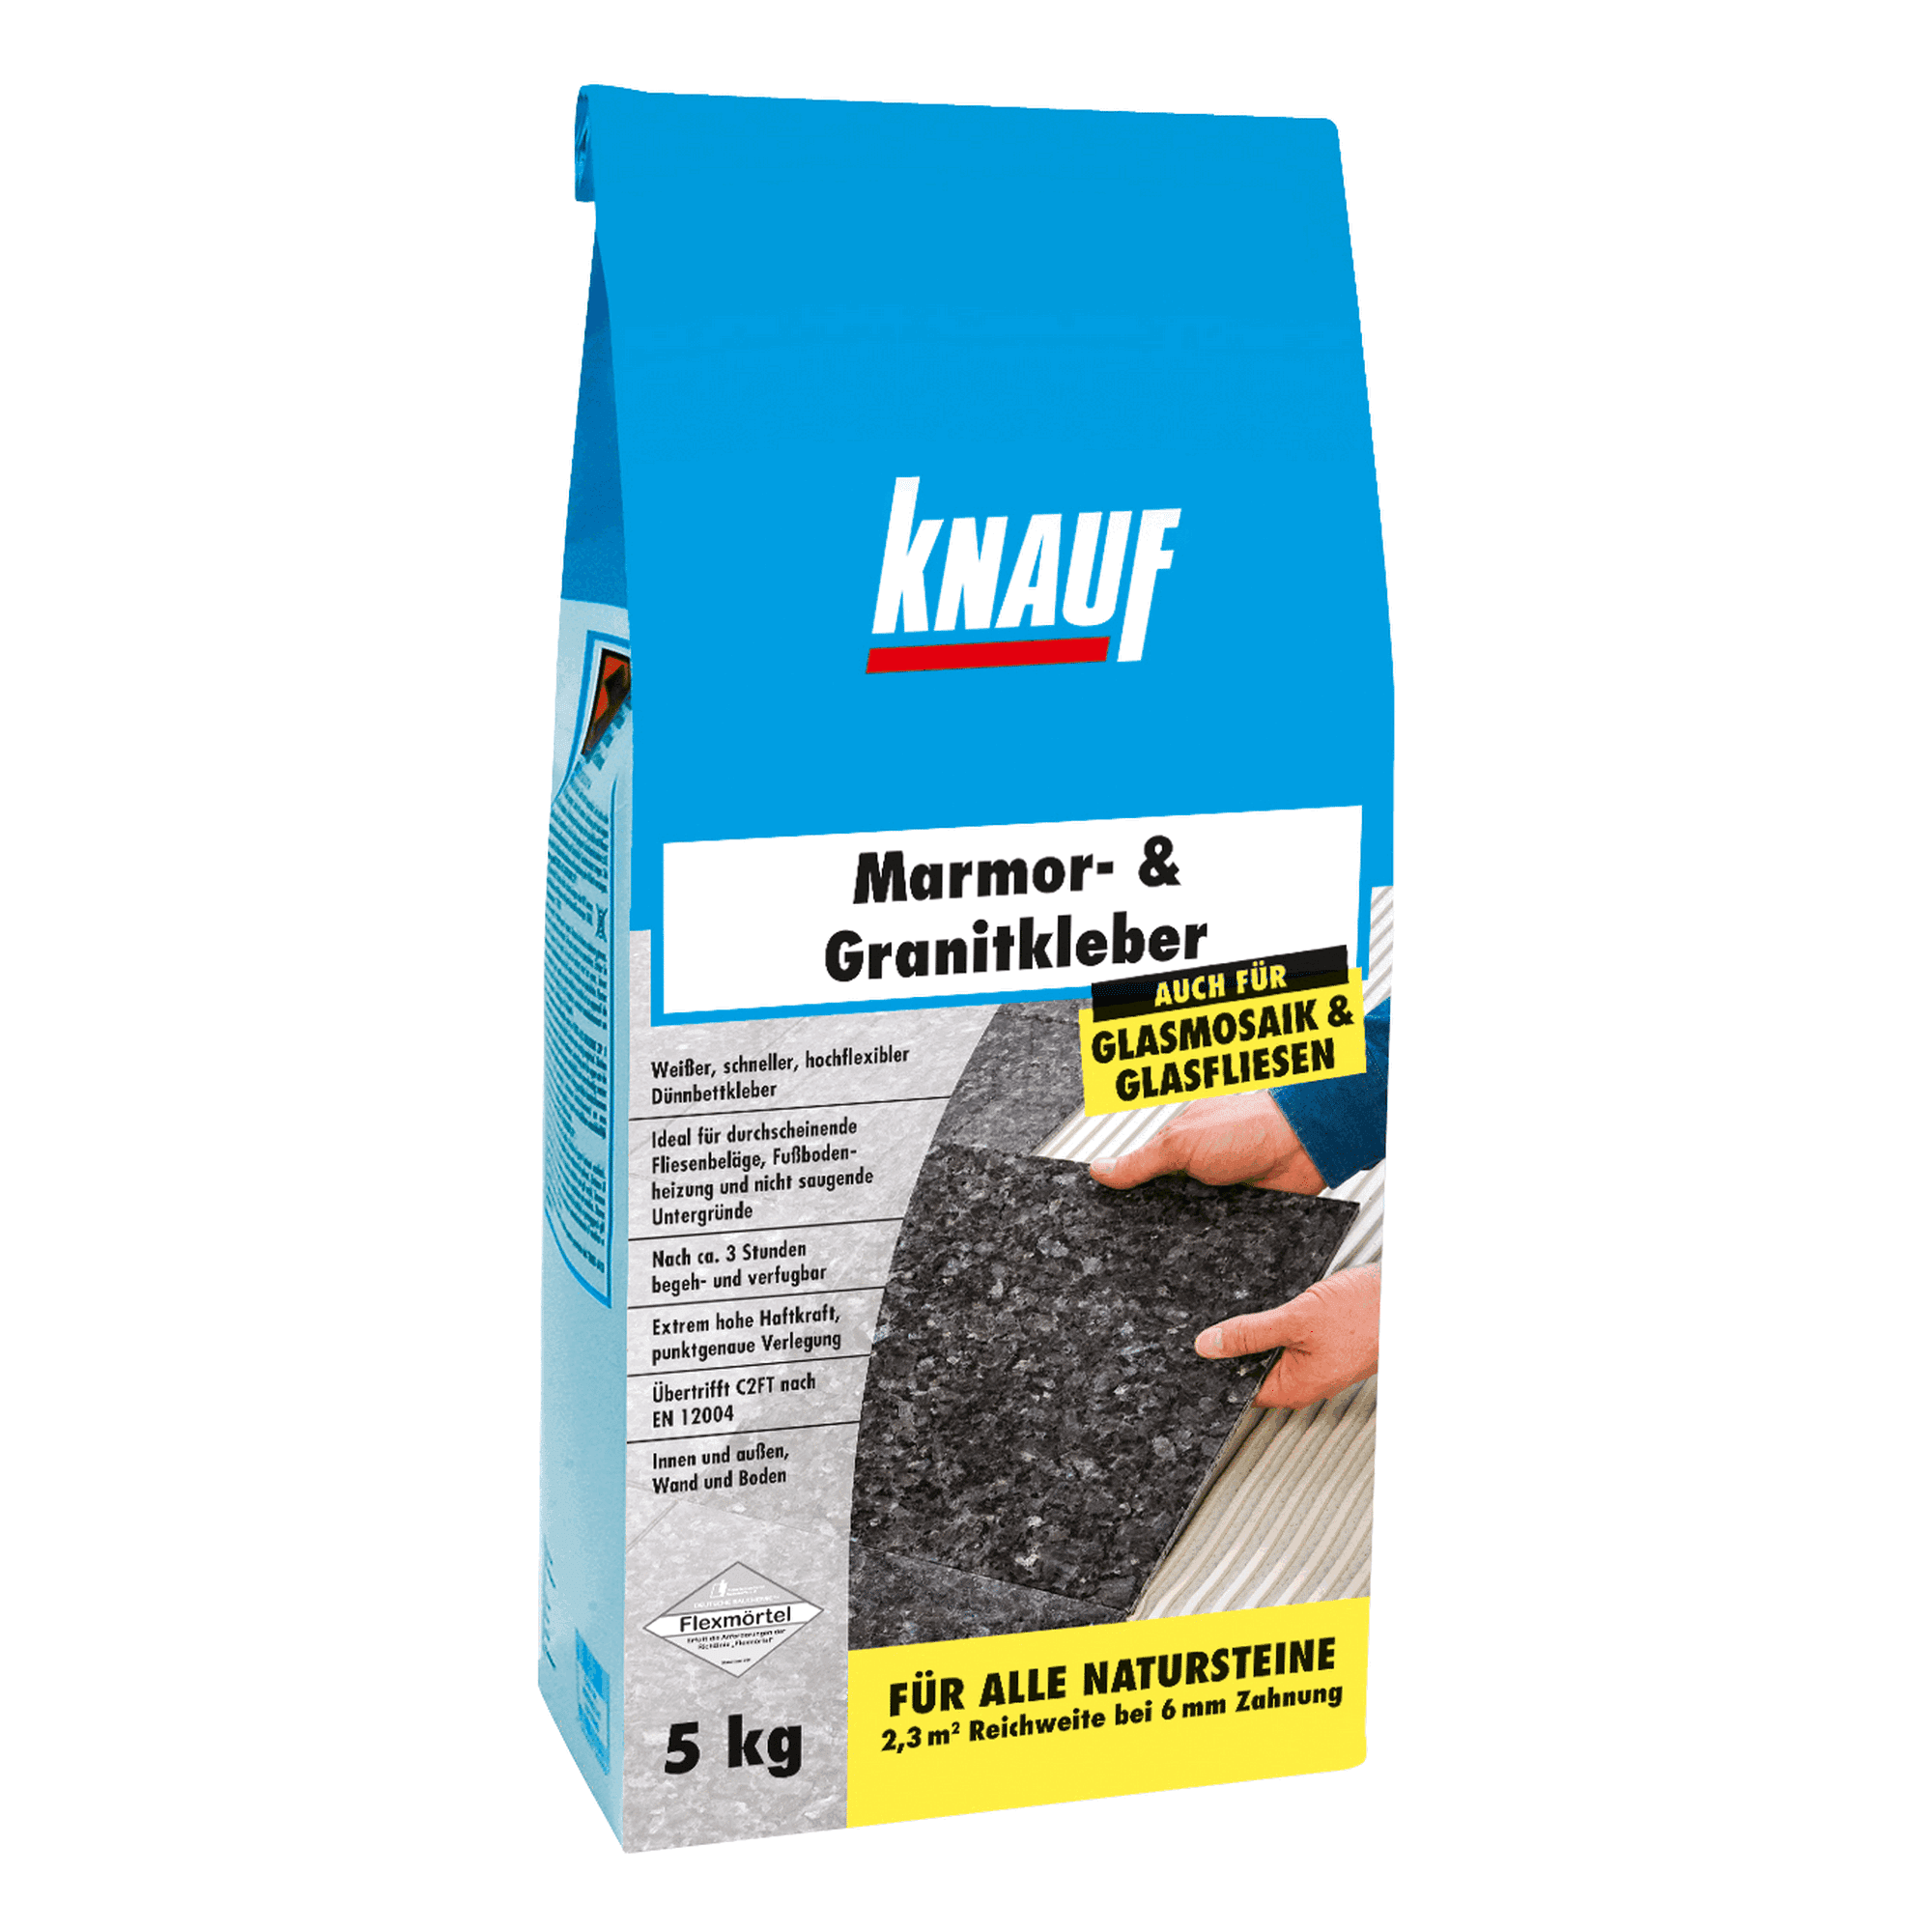 Marmor- und Granitkleber 5 kg + product picture